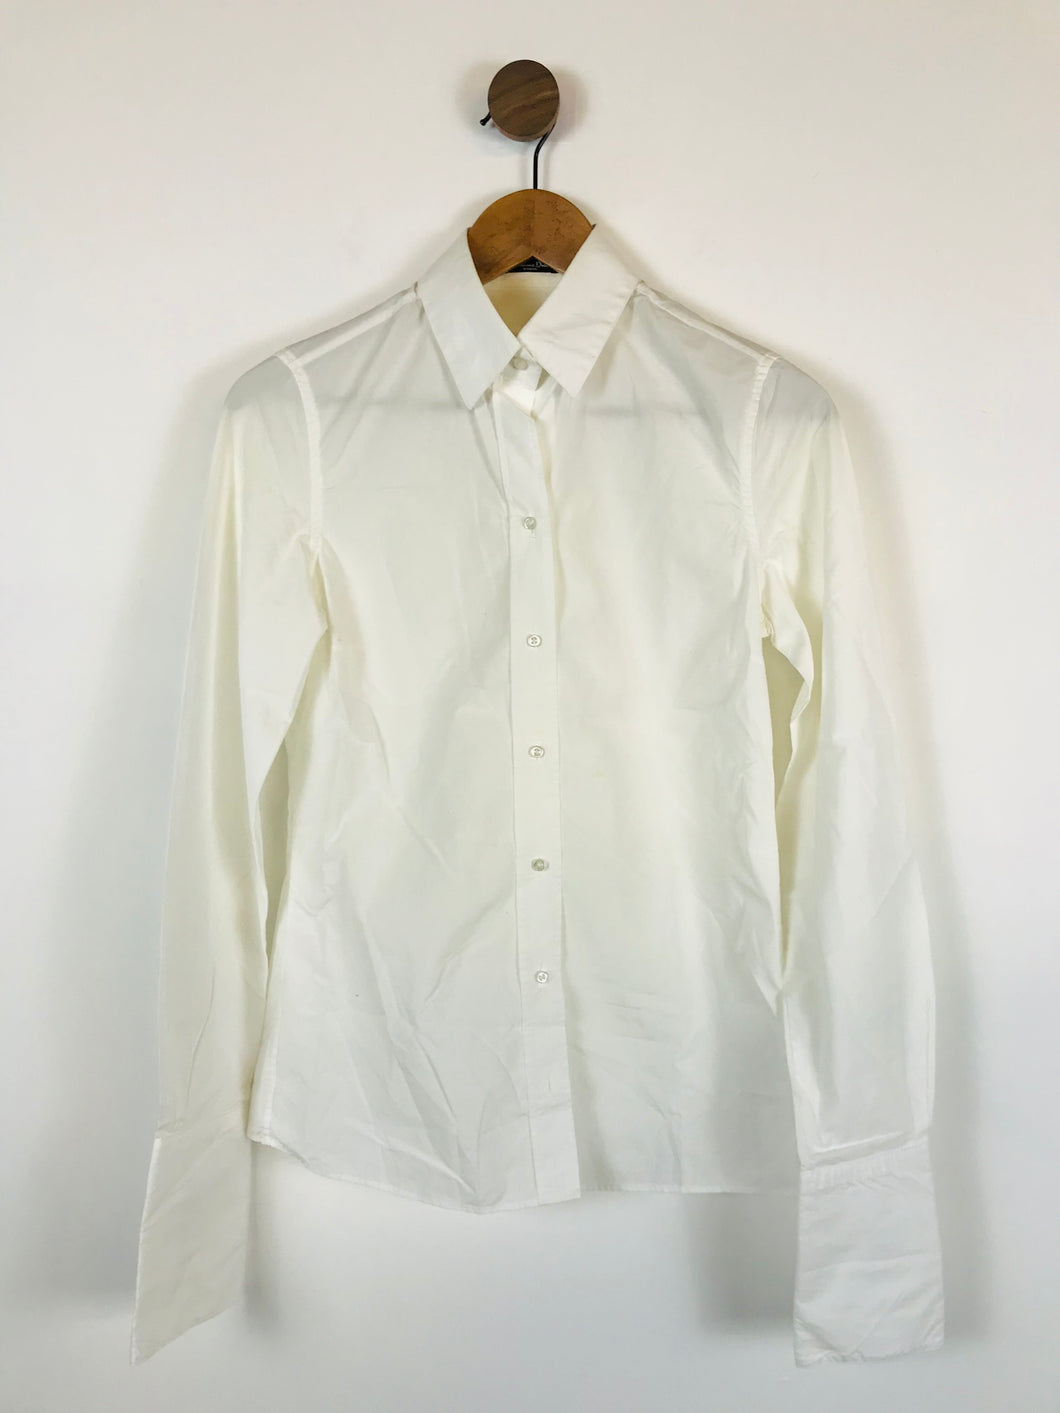 Massimo Dutti Women's Long Sleeve Button-Up Shirt | 36 UK8 | White